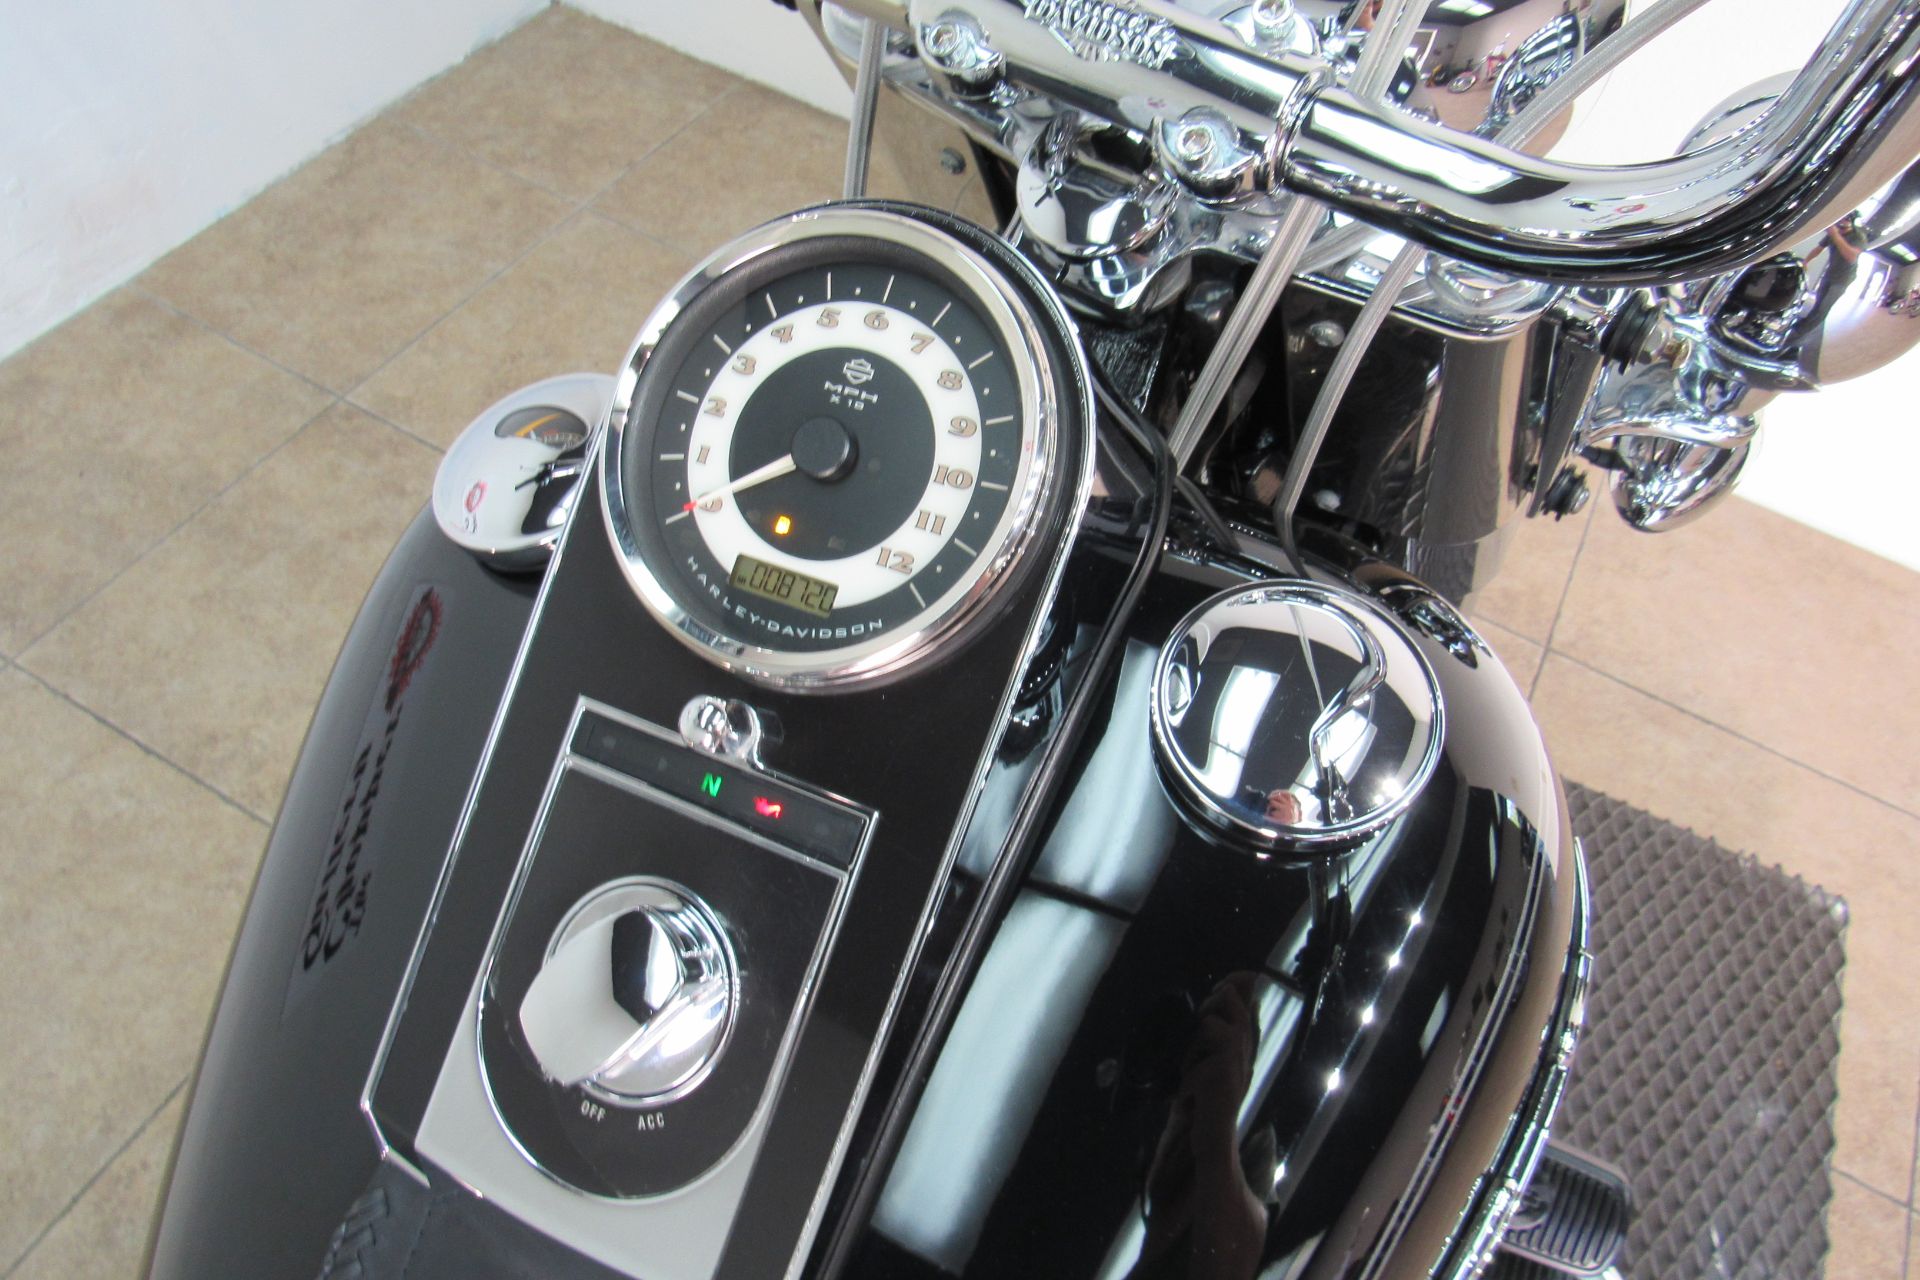 2013 Harley-Davidson Softail® Deluxe in Temecula, California - Photo 21